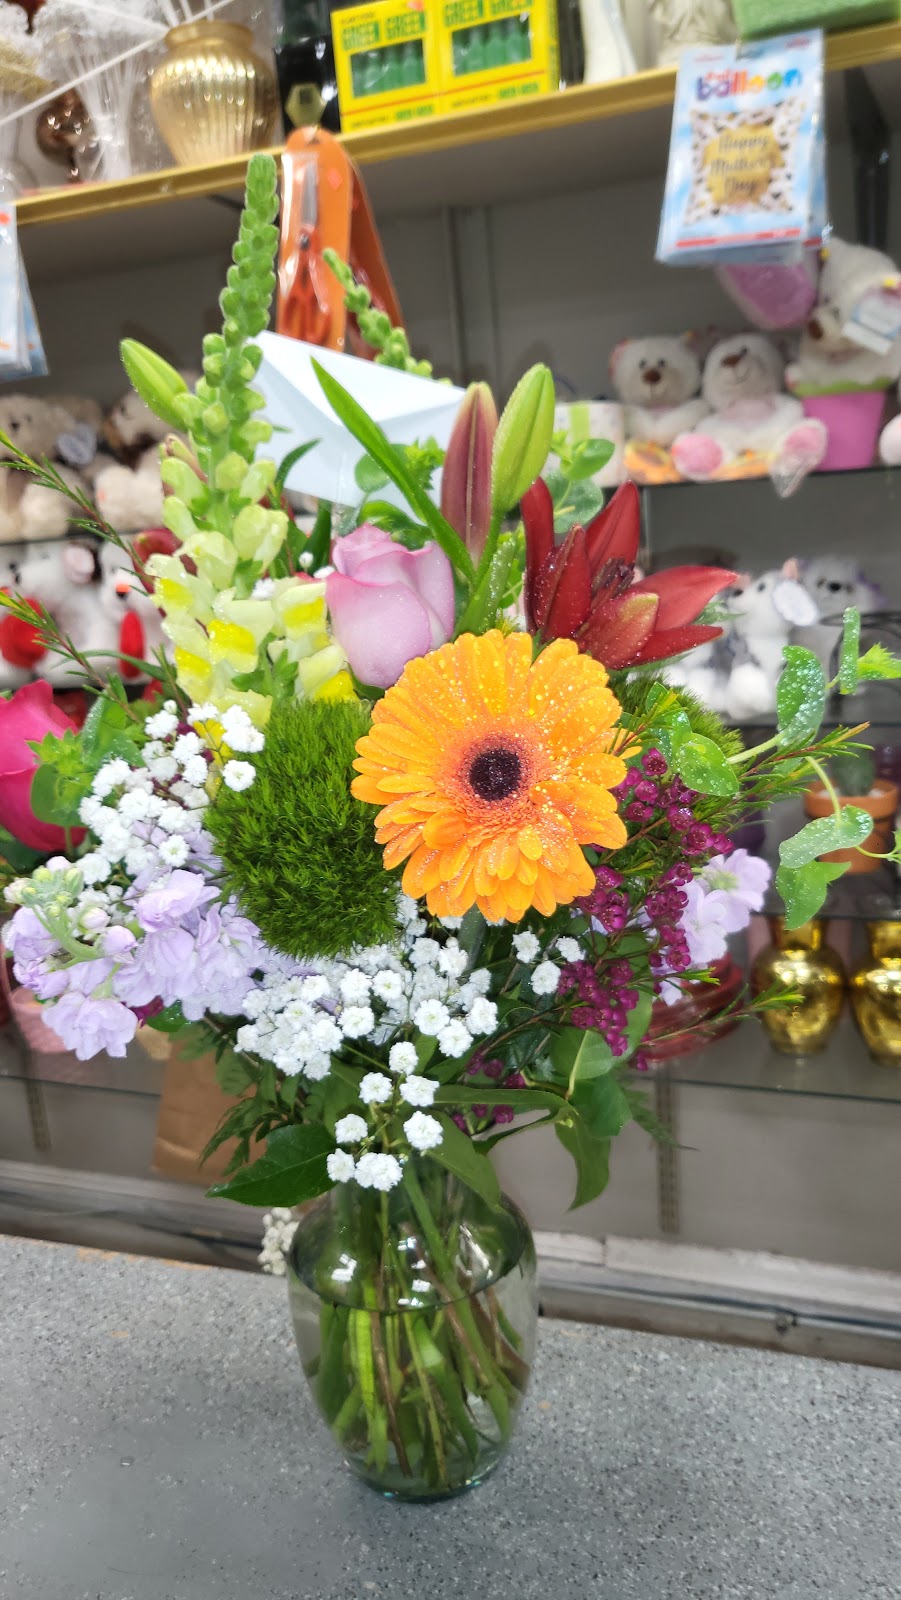 Danielas Flower Shop II | 3650 Broadway, New York, NY 10031, USA | Phone: (646) 678-3150